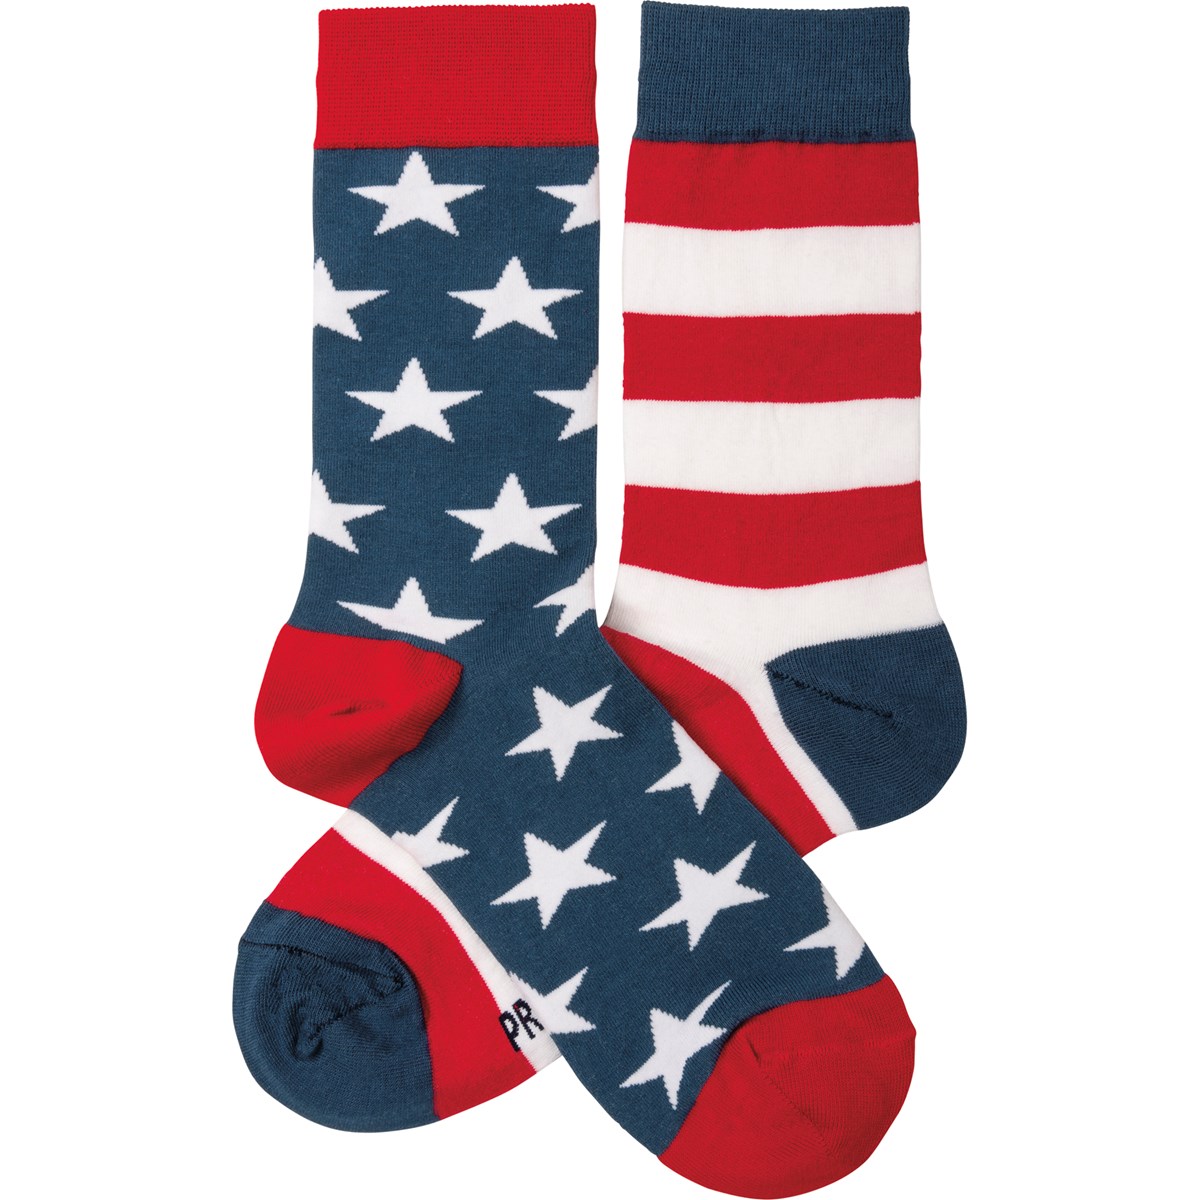 Stars And Stripes Socks - Cotton, Nylon, Spandex